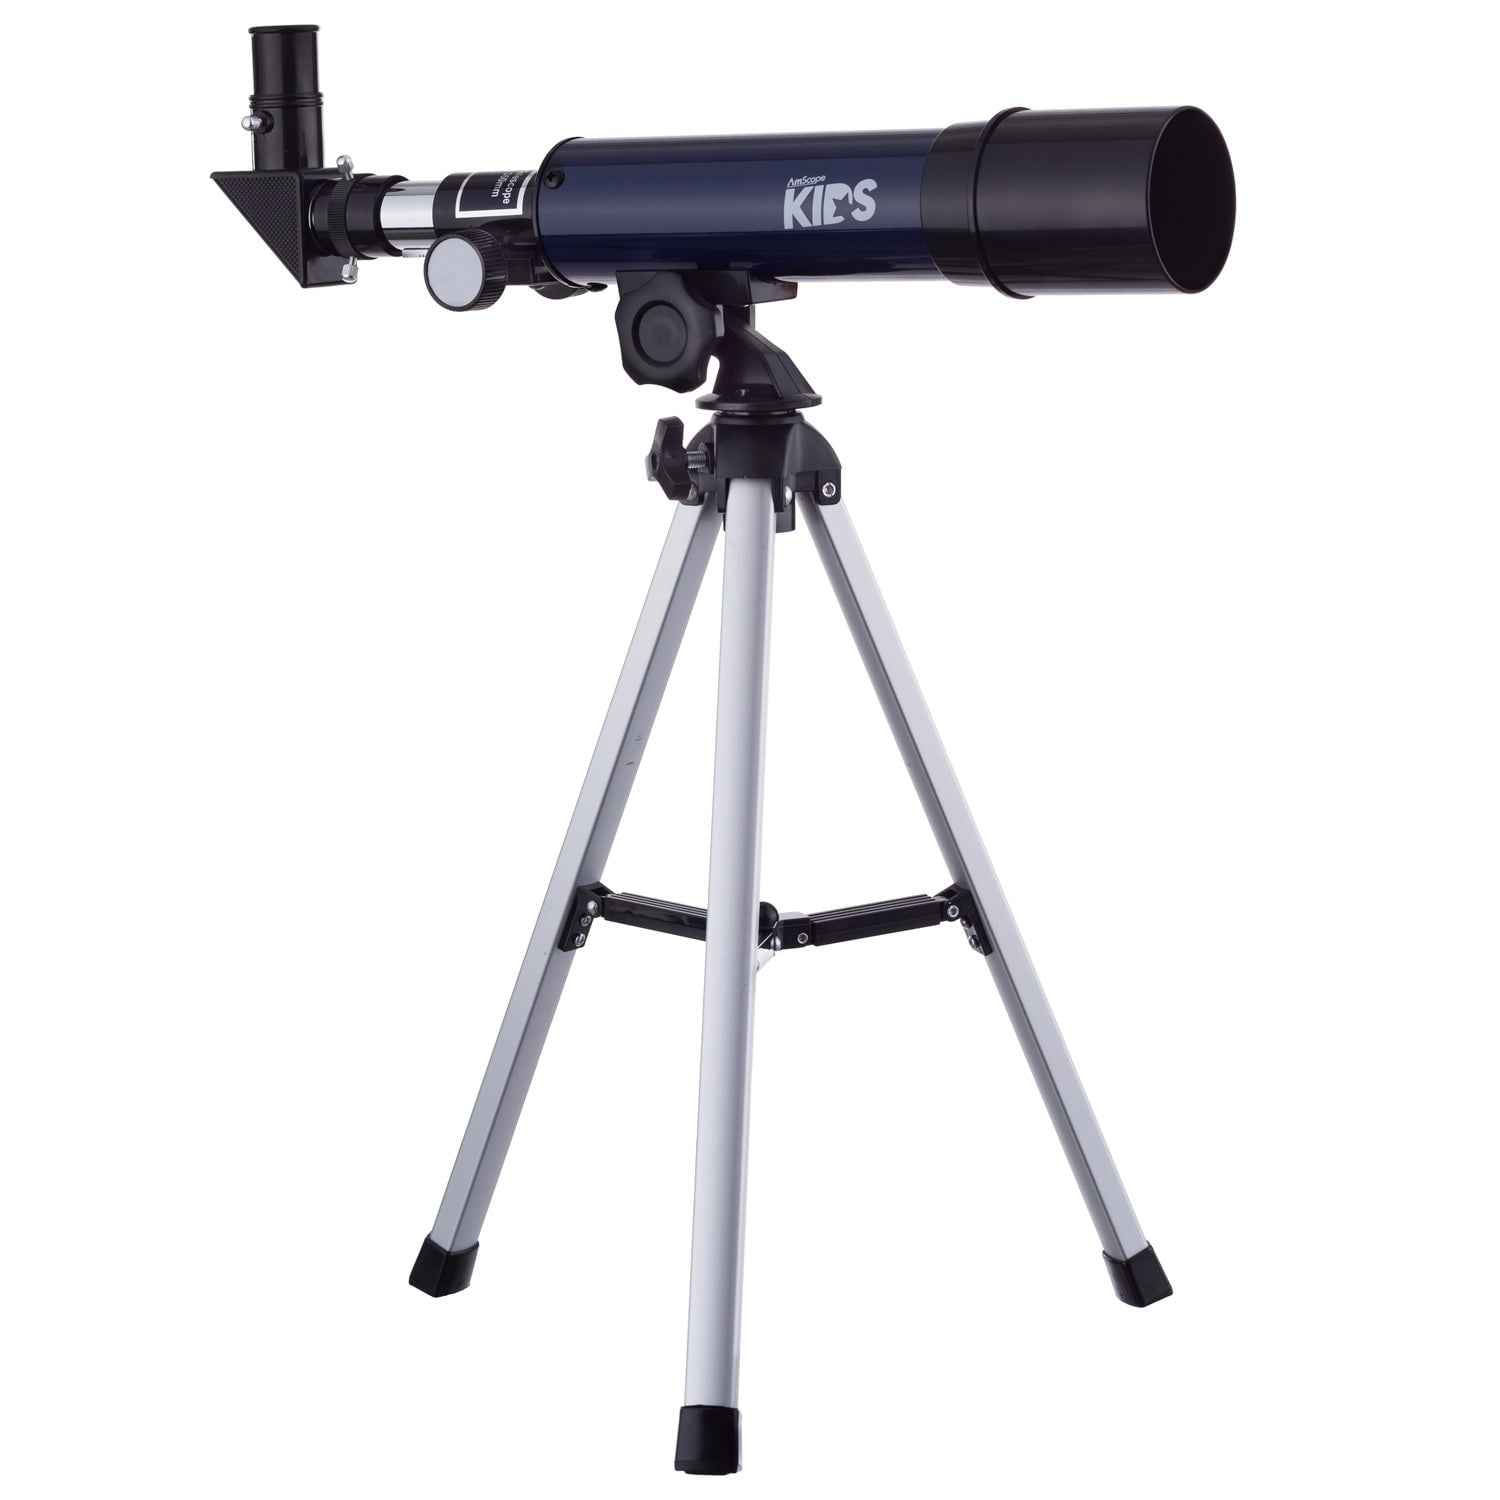 360/50mm Astronomical Refractor Telescope Refractive Eyepieces Tripod Beginners